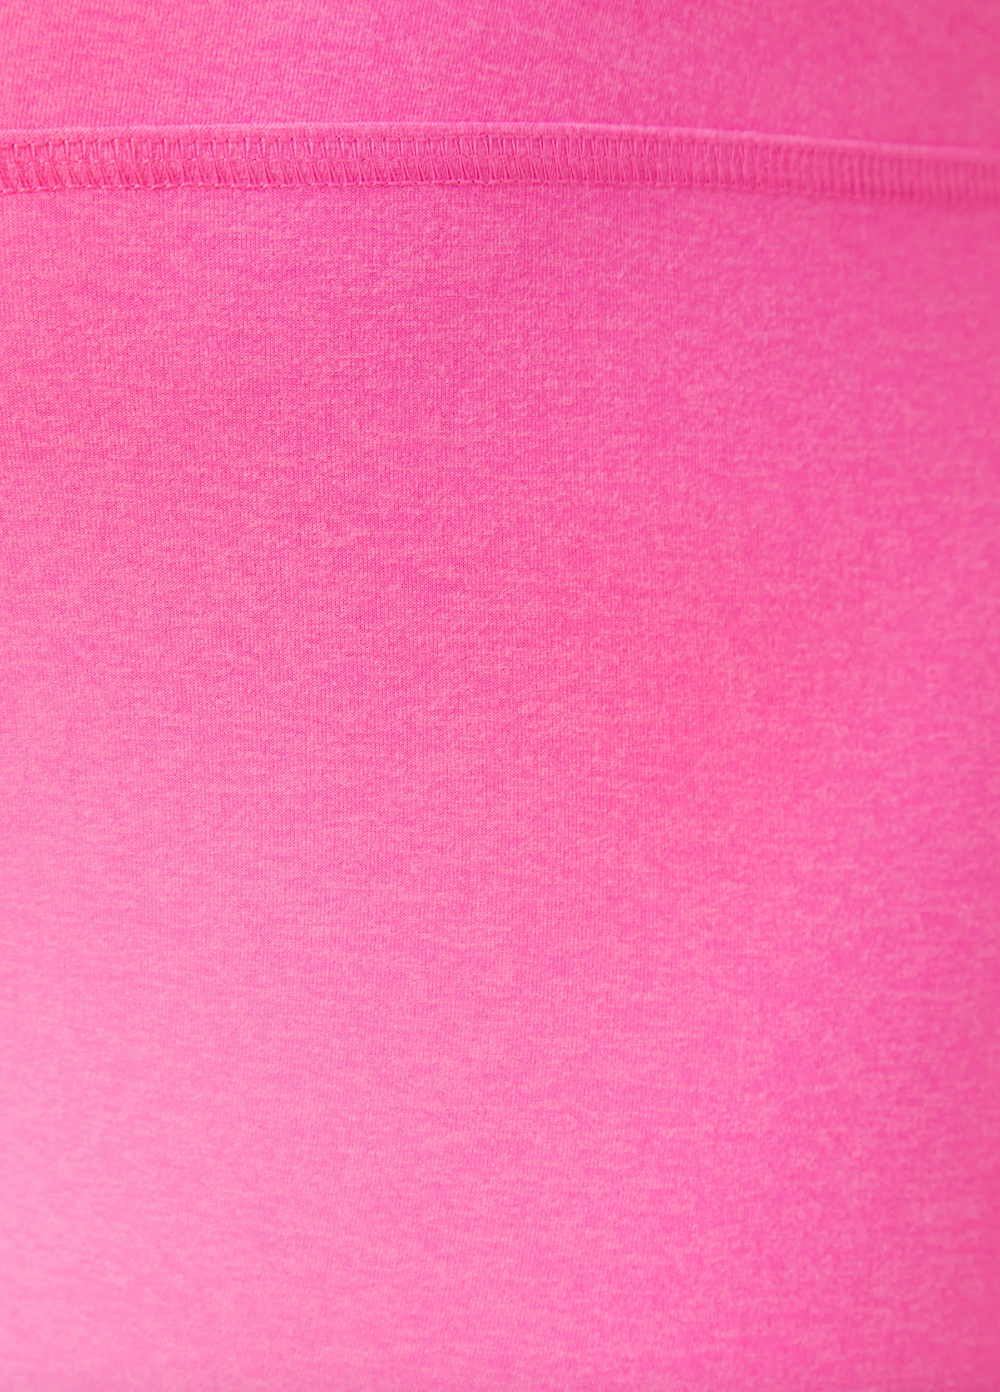 Spacedye Lift Your Spirits Bra - Pink Hype Heather